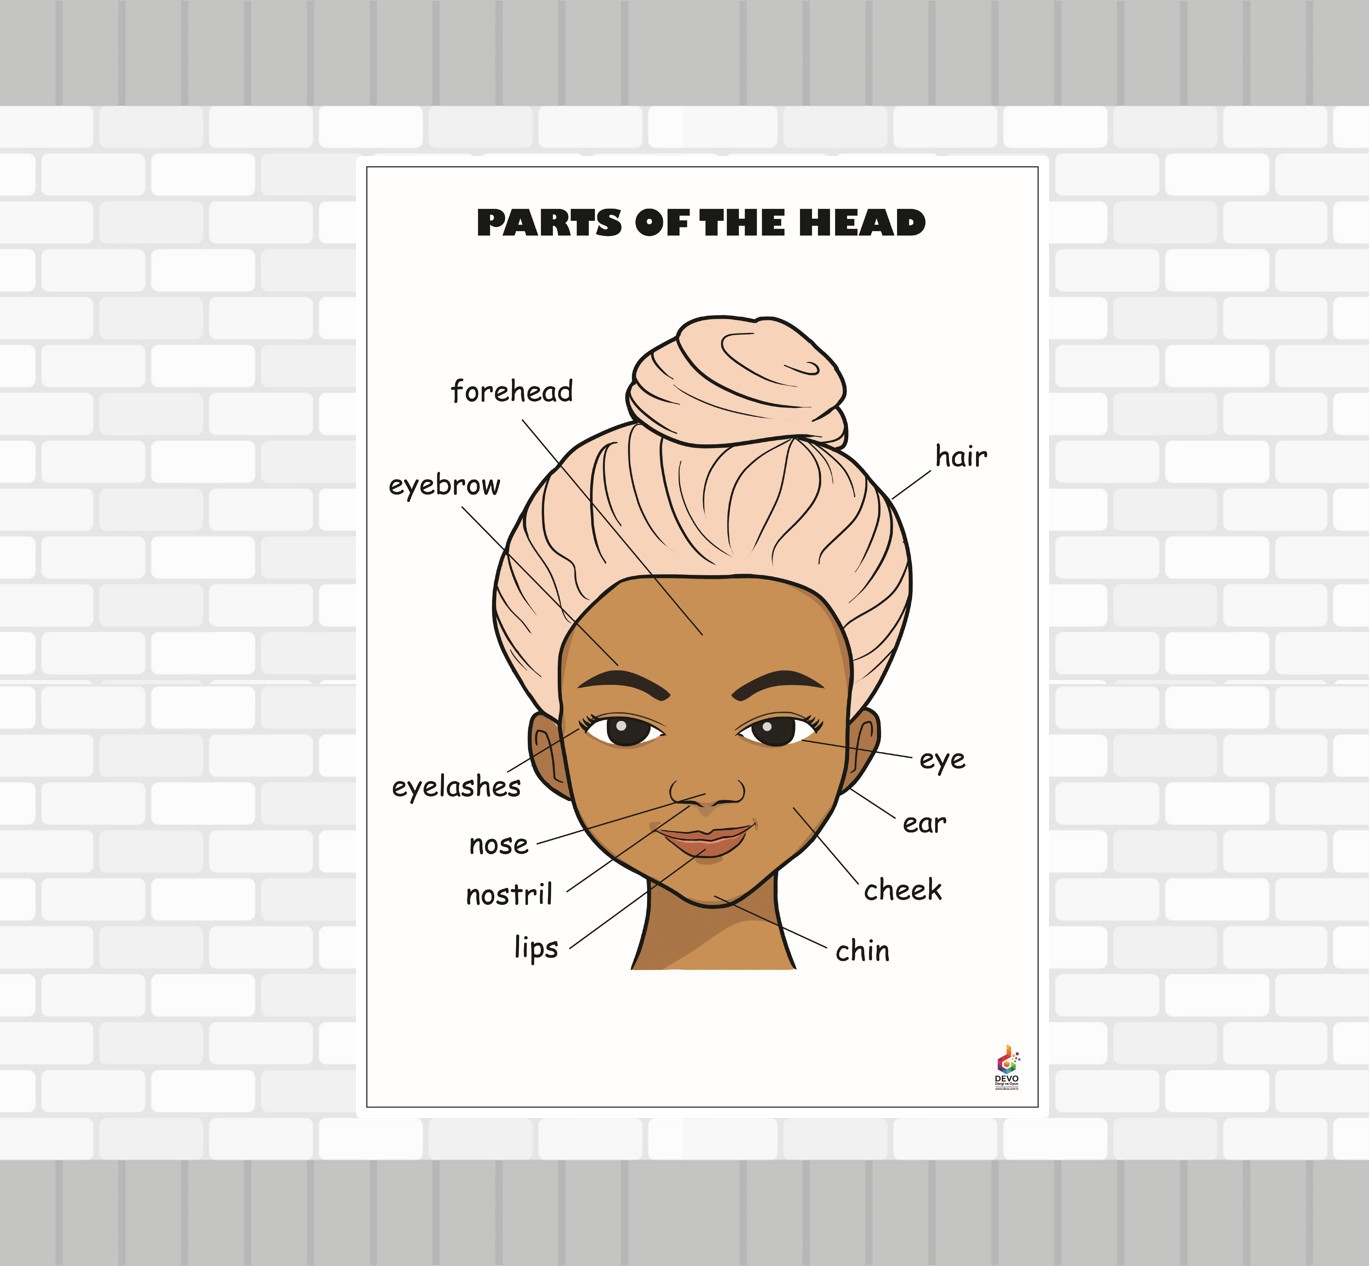 Parts Of The Head Poster - Başın Kısımları Posteri